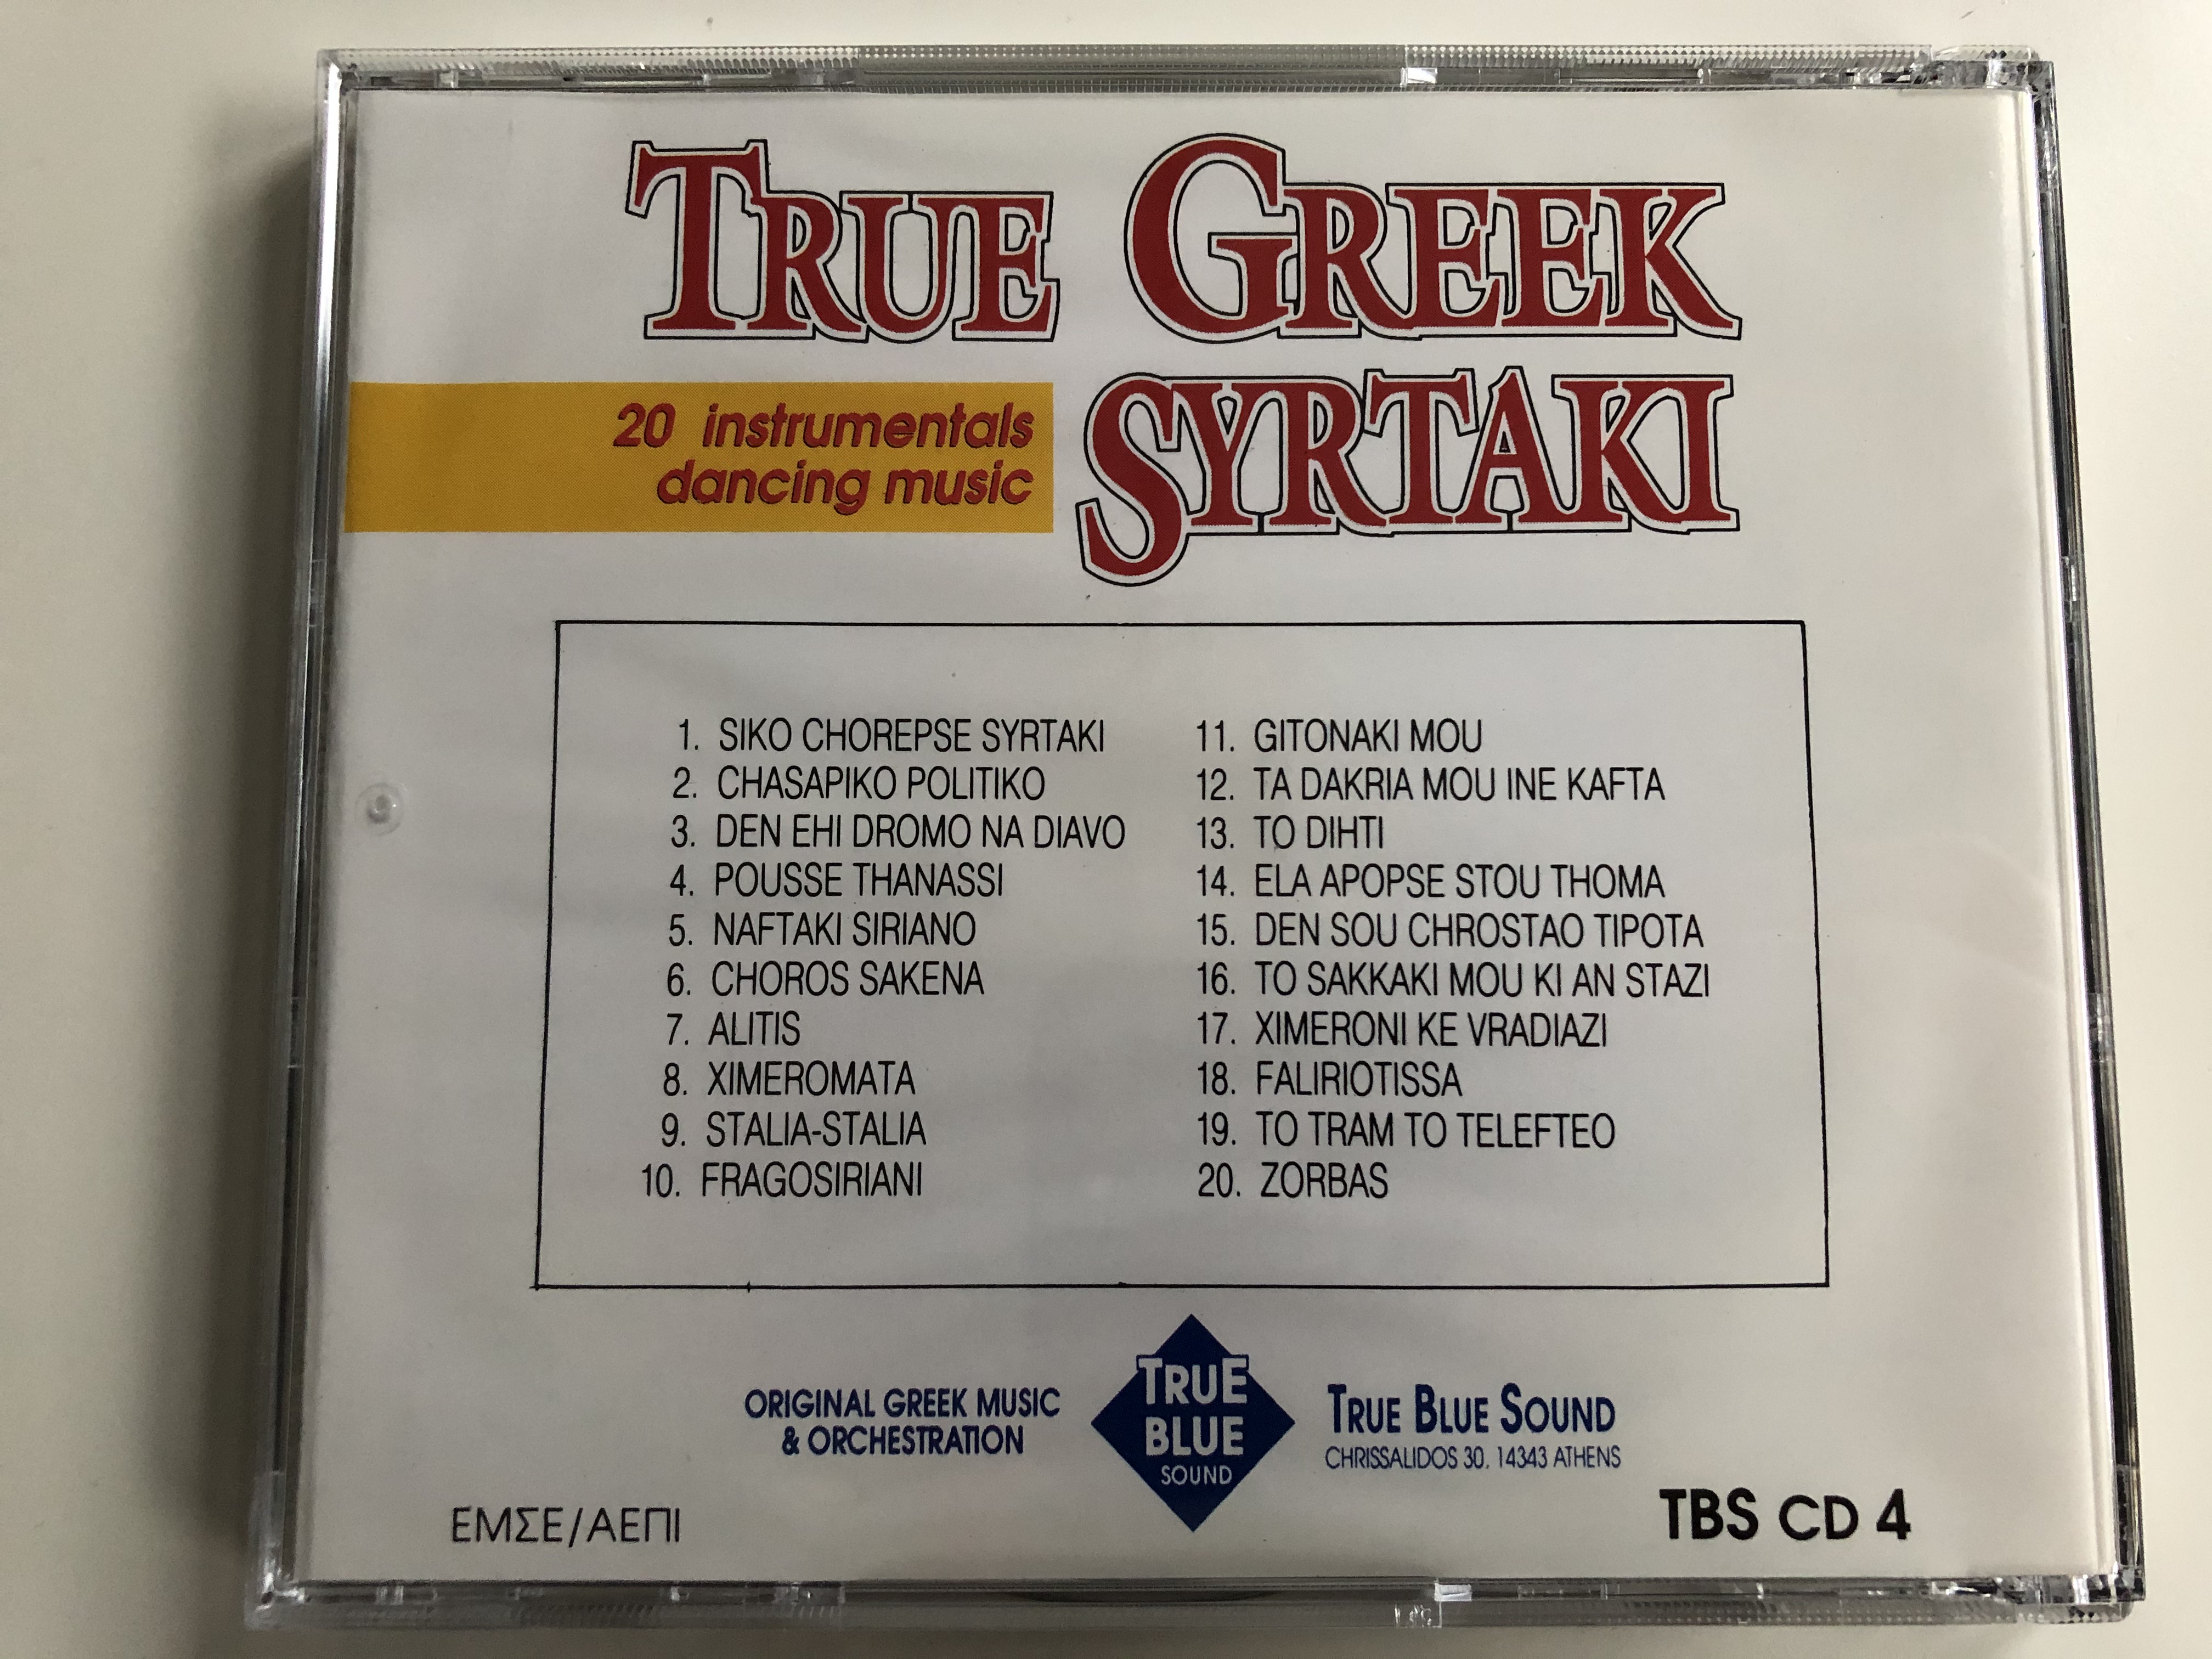 true-greek-syrtaki-20-instrumentals-dancing-music-true-blue-sound-audio-cd-1991-tbs-cd-4-4-.jpg